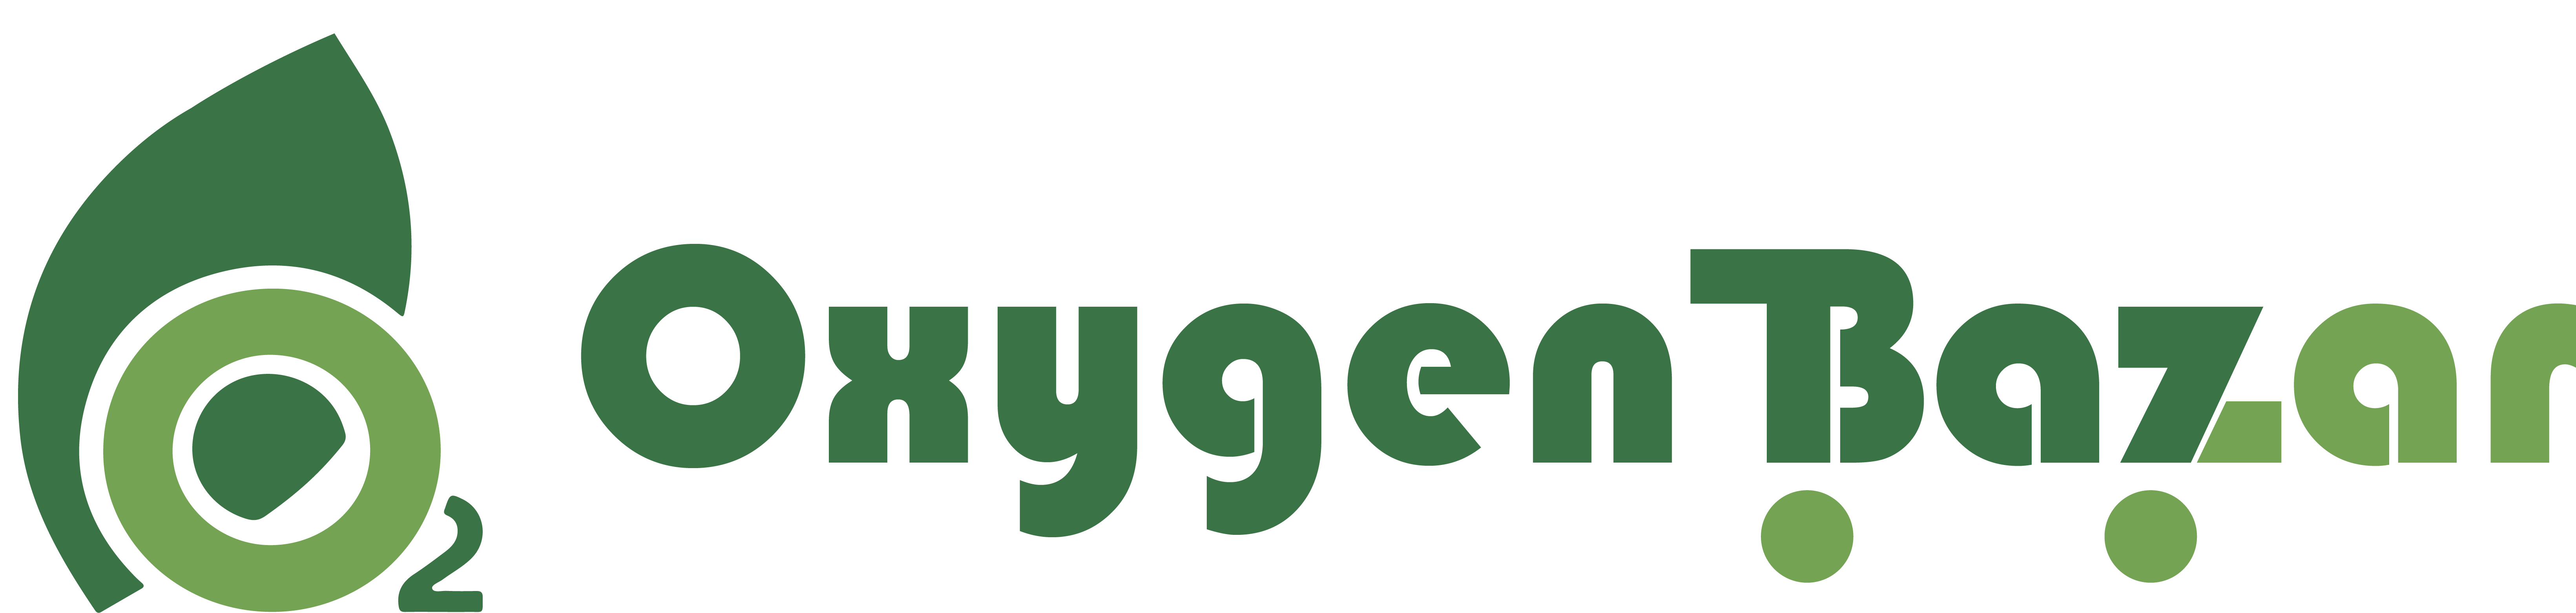 Oxygen Bazar